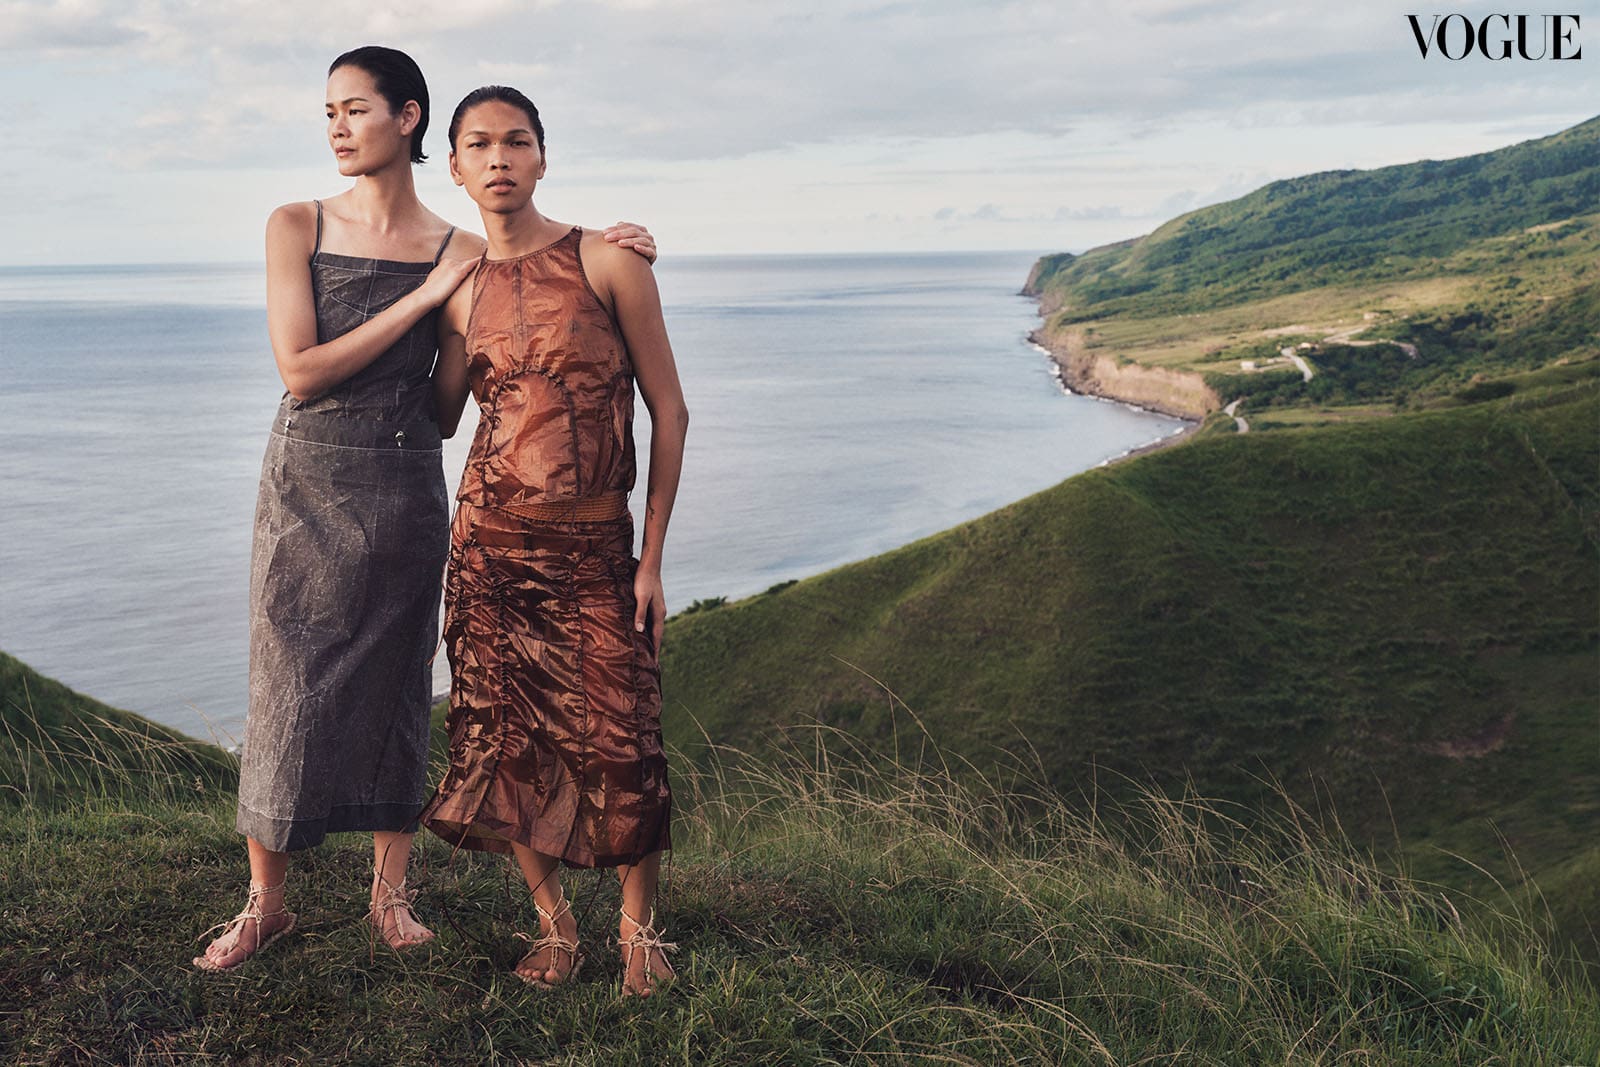 Jo Ann wears a coated gray vinyl apron dress while Lukresia wears a caramel-colored “tech organza” ensemble, both from ECKHAUS LATTA. Both wear Ivatan Tukap rope sandals.